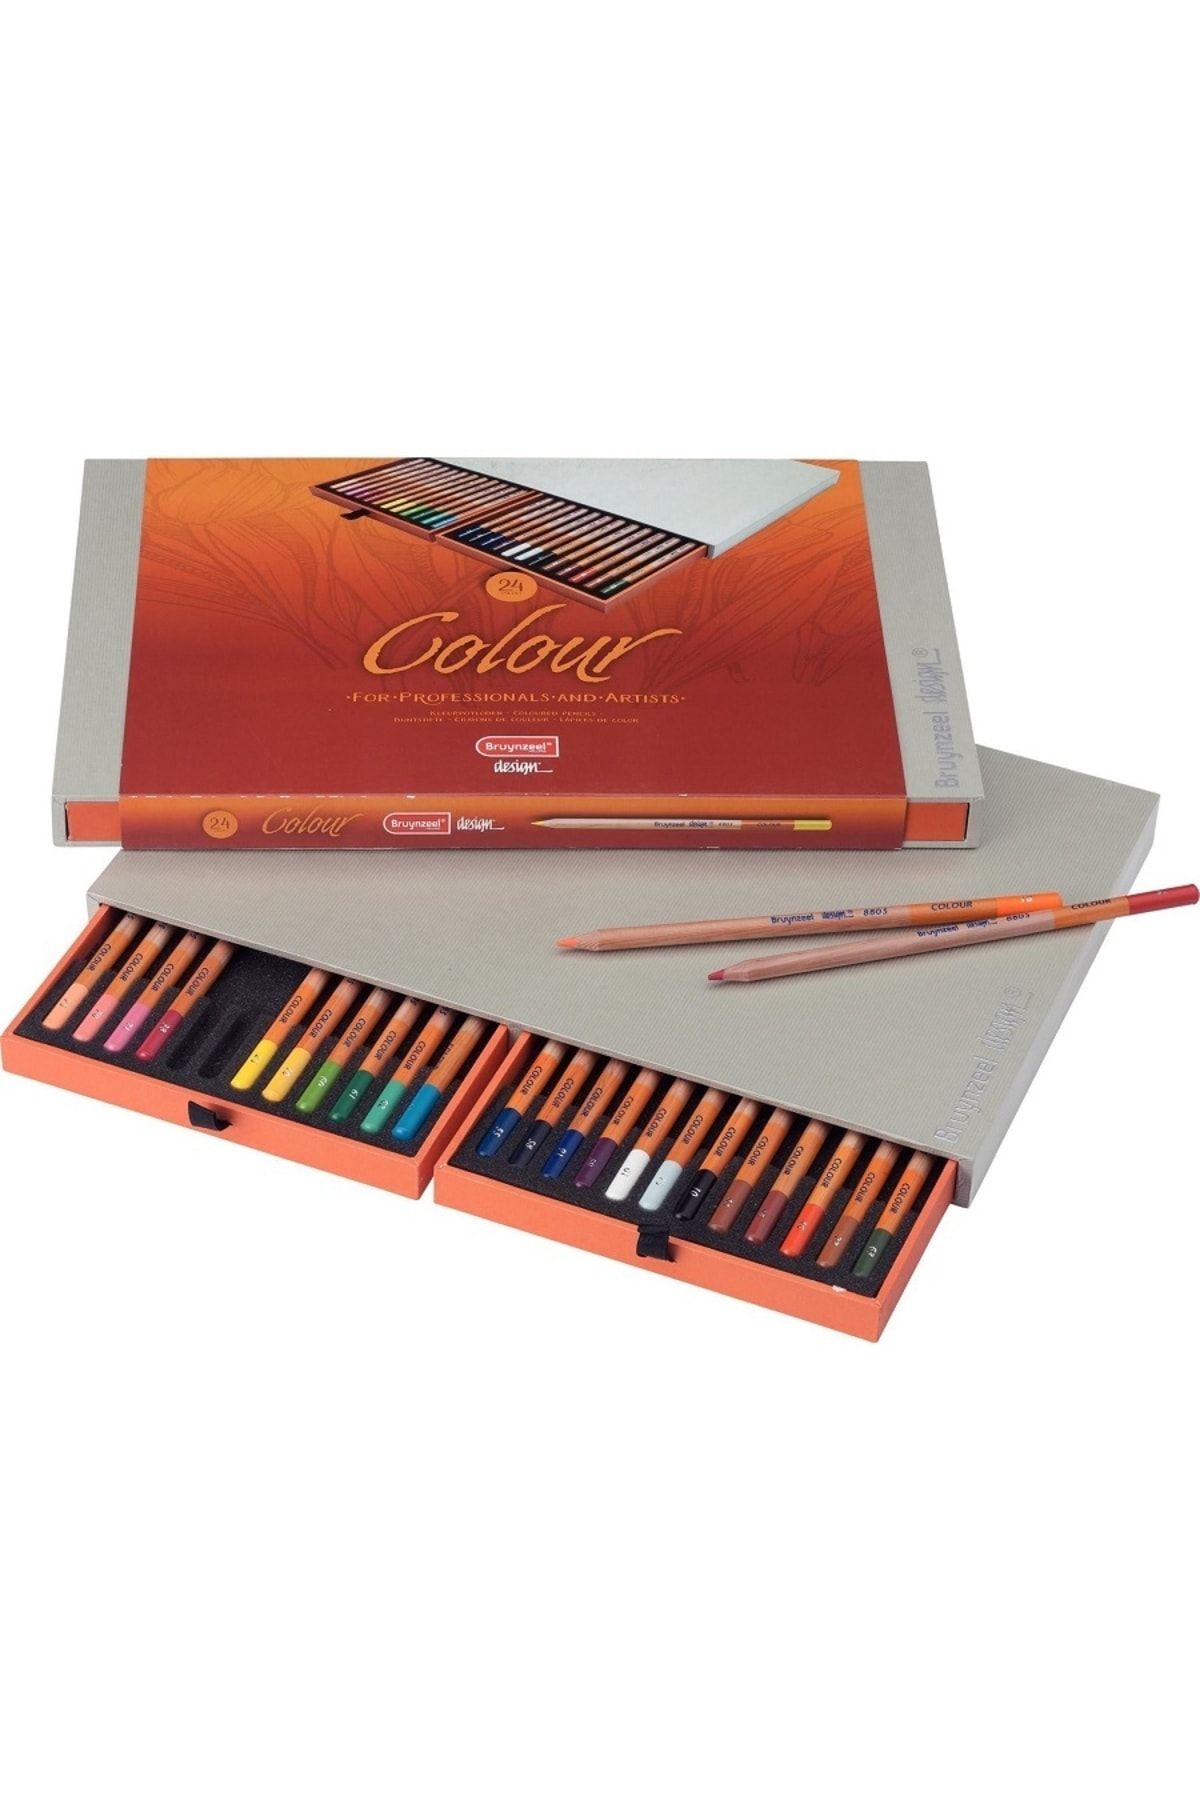 Bruynzeel Design Colour Pencils Deluxe Box Kuru Boya Kalem Seti 24 Renk